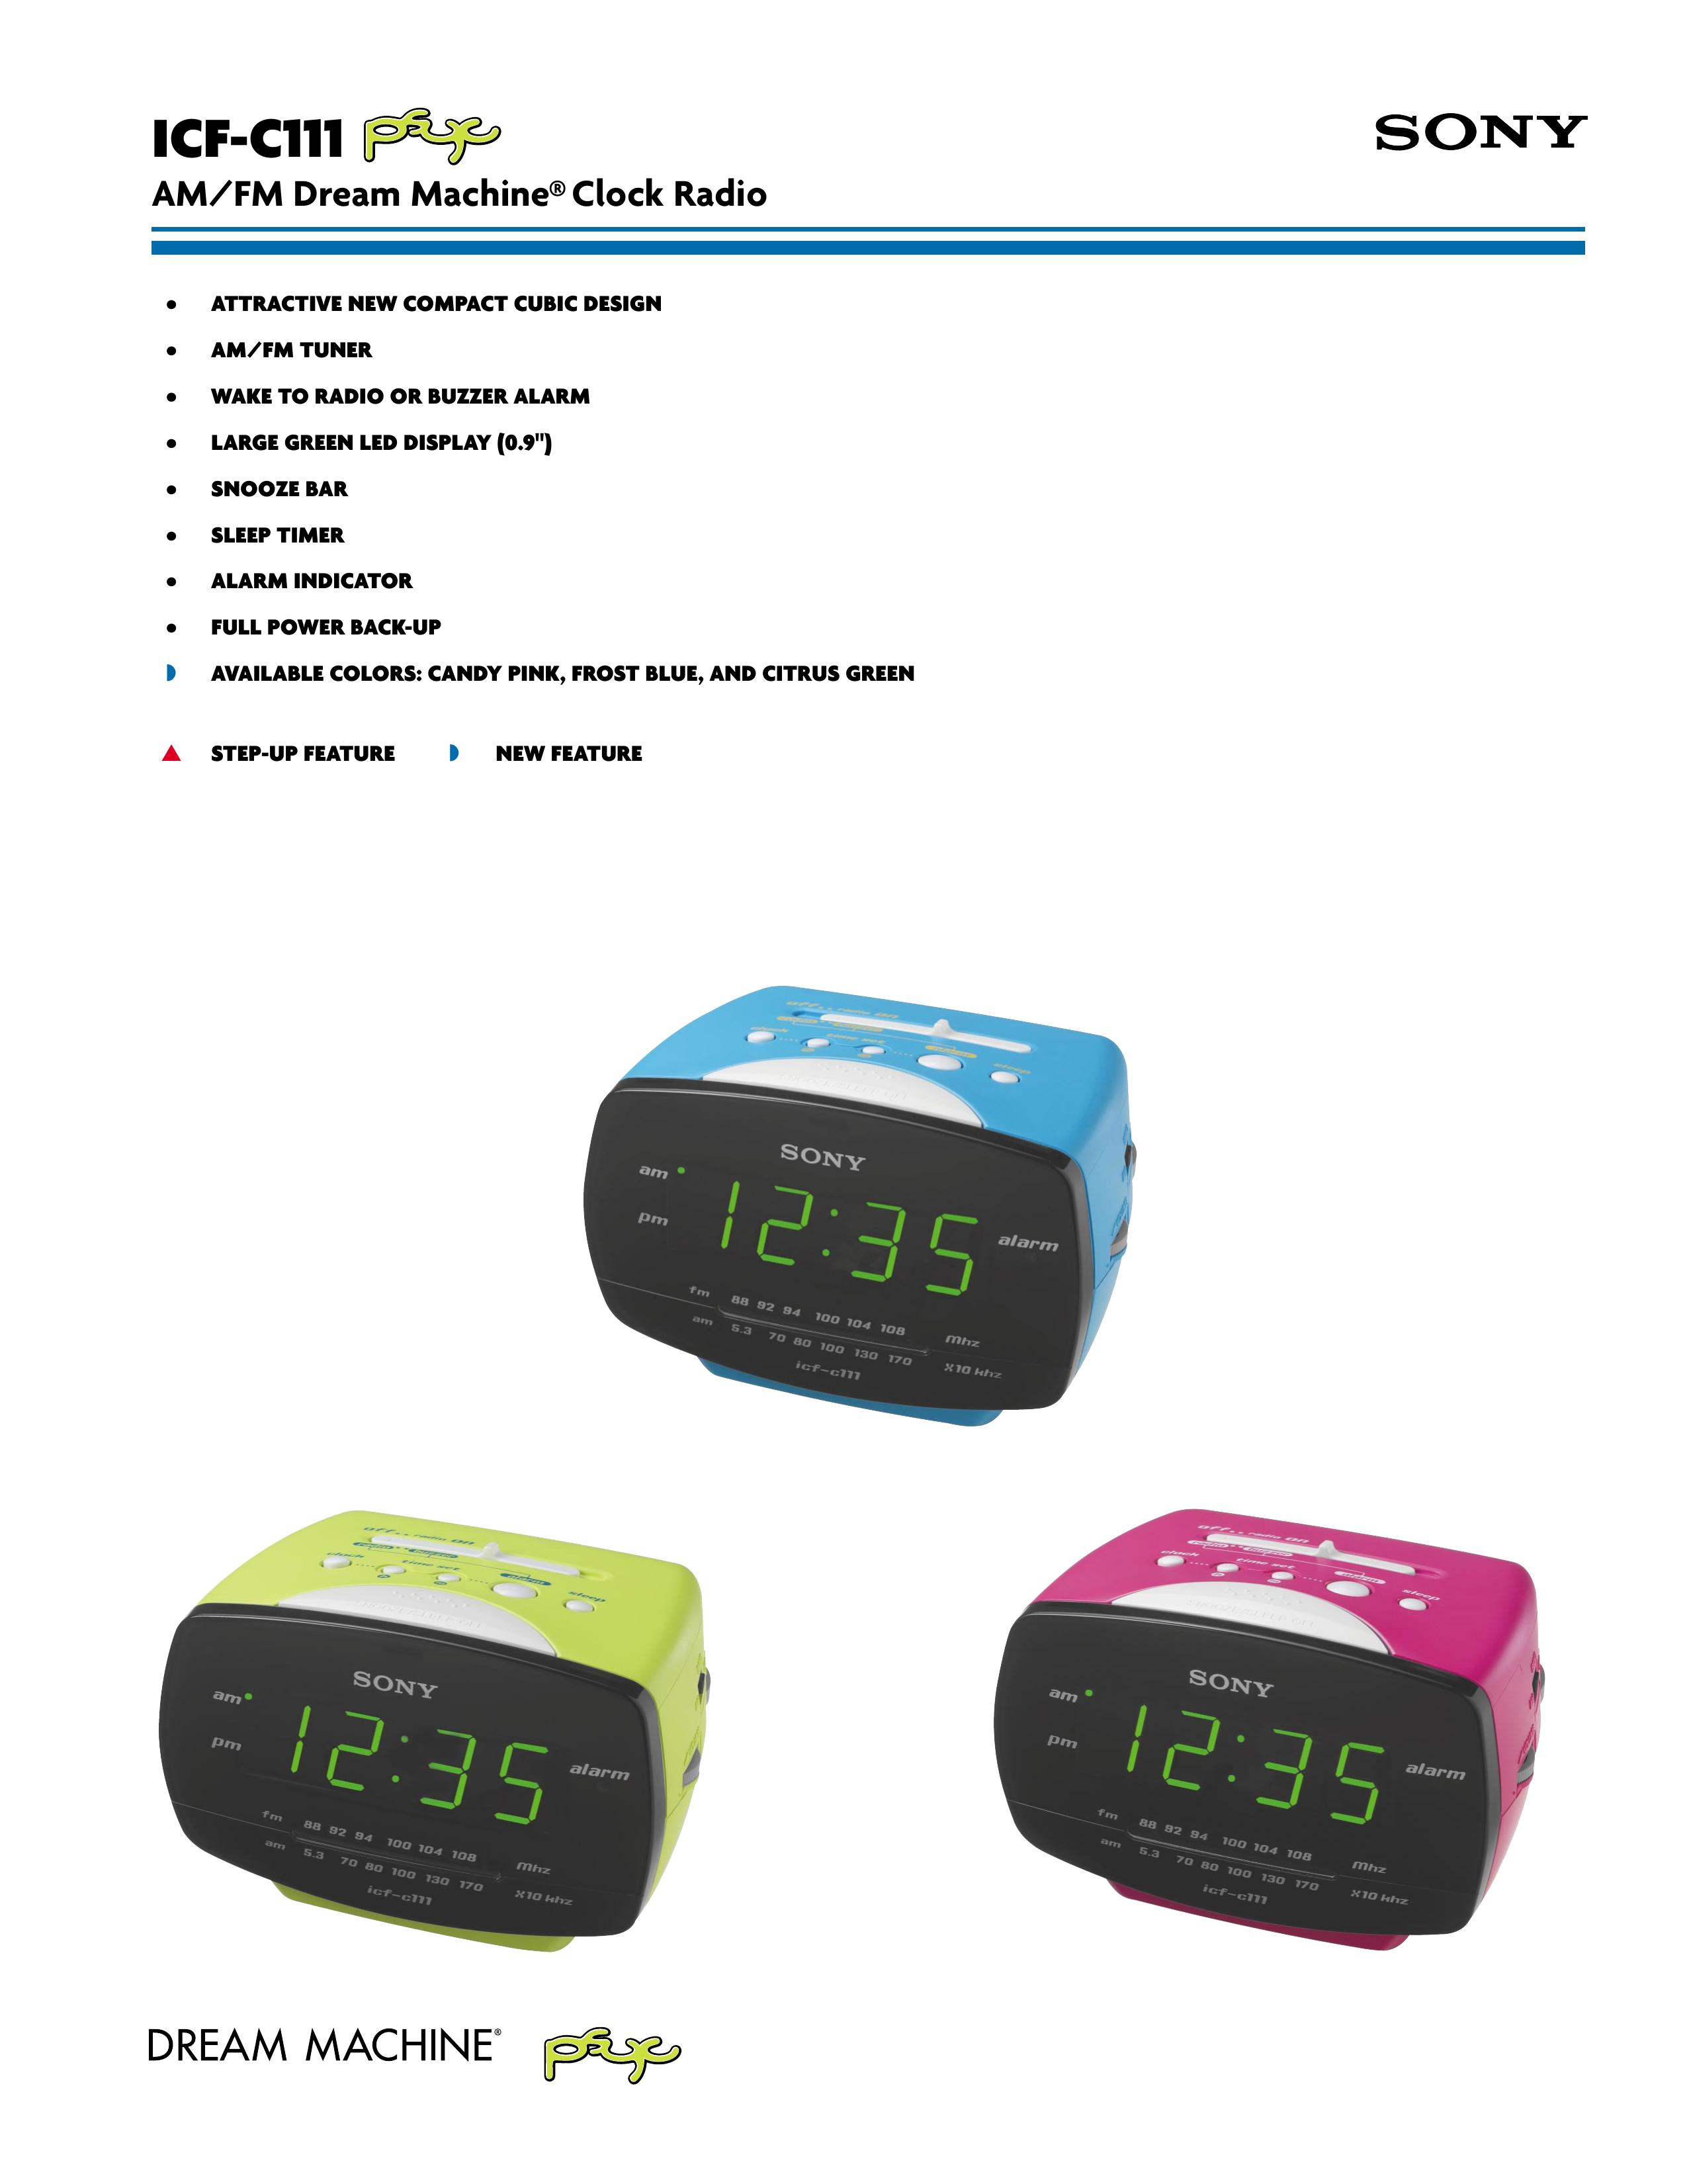 Sony ICF-C111 Clock Radio User Manual